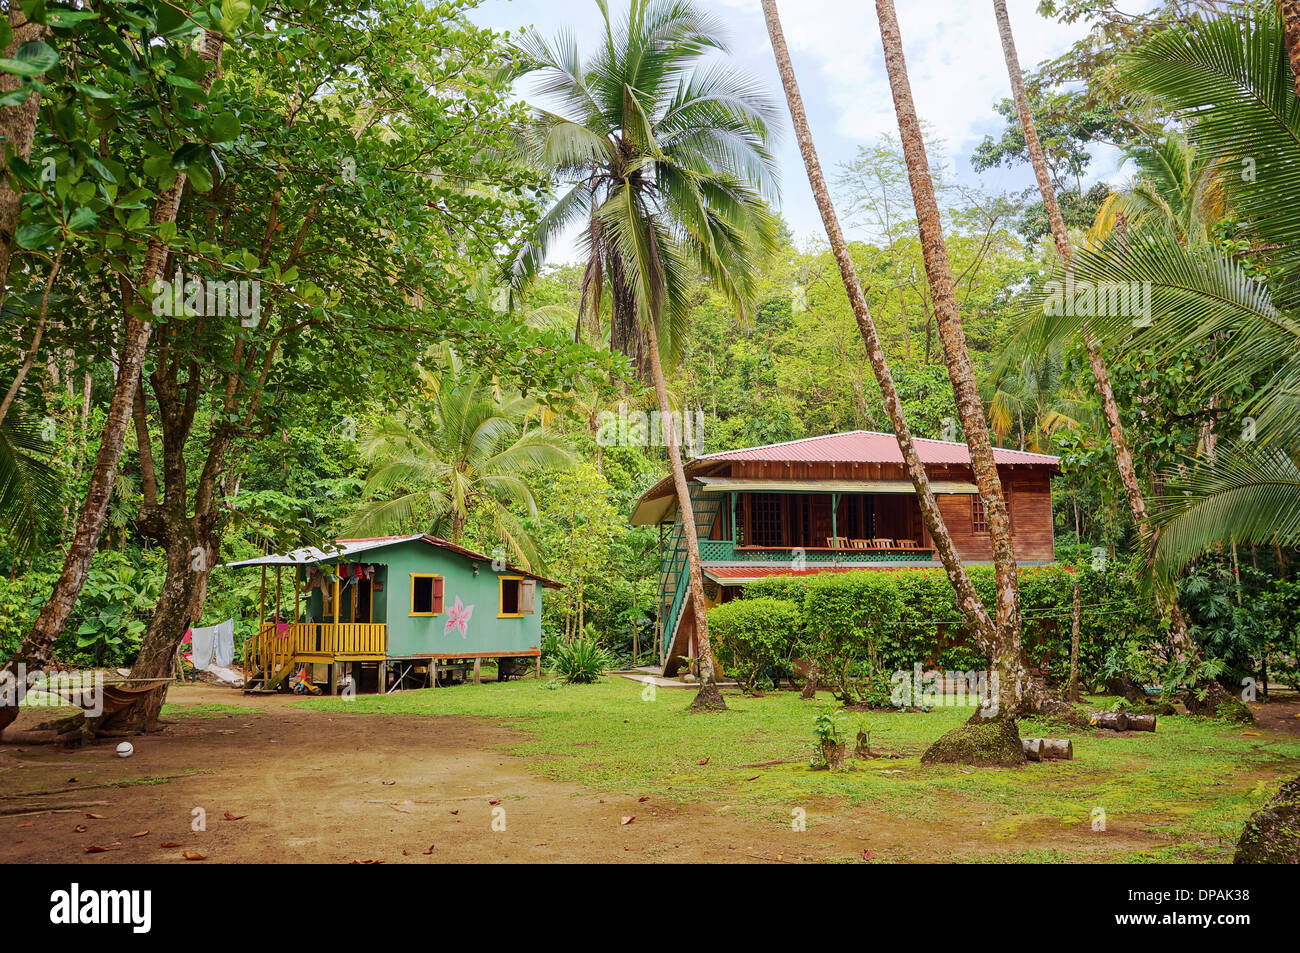 Caribbean house and hut with tropical vegetation, Gandoca Manzanillo national wildlife refuge, Limon, Costa Rica Stock Photo